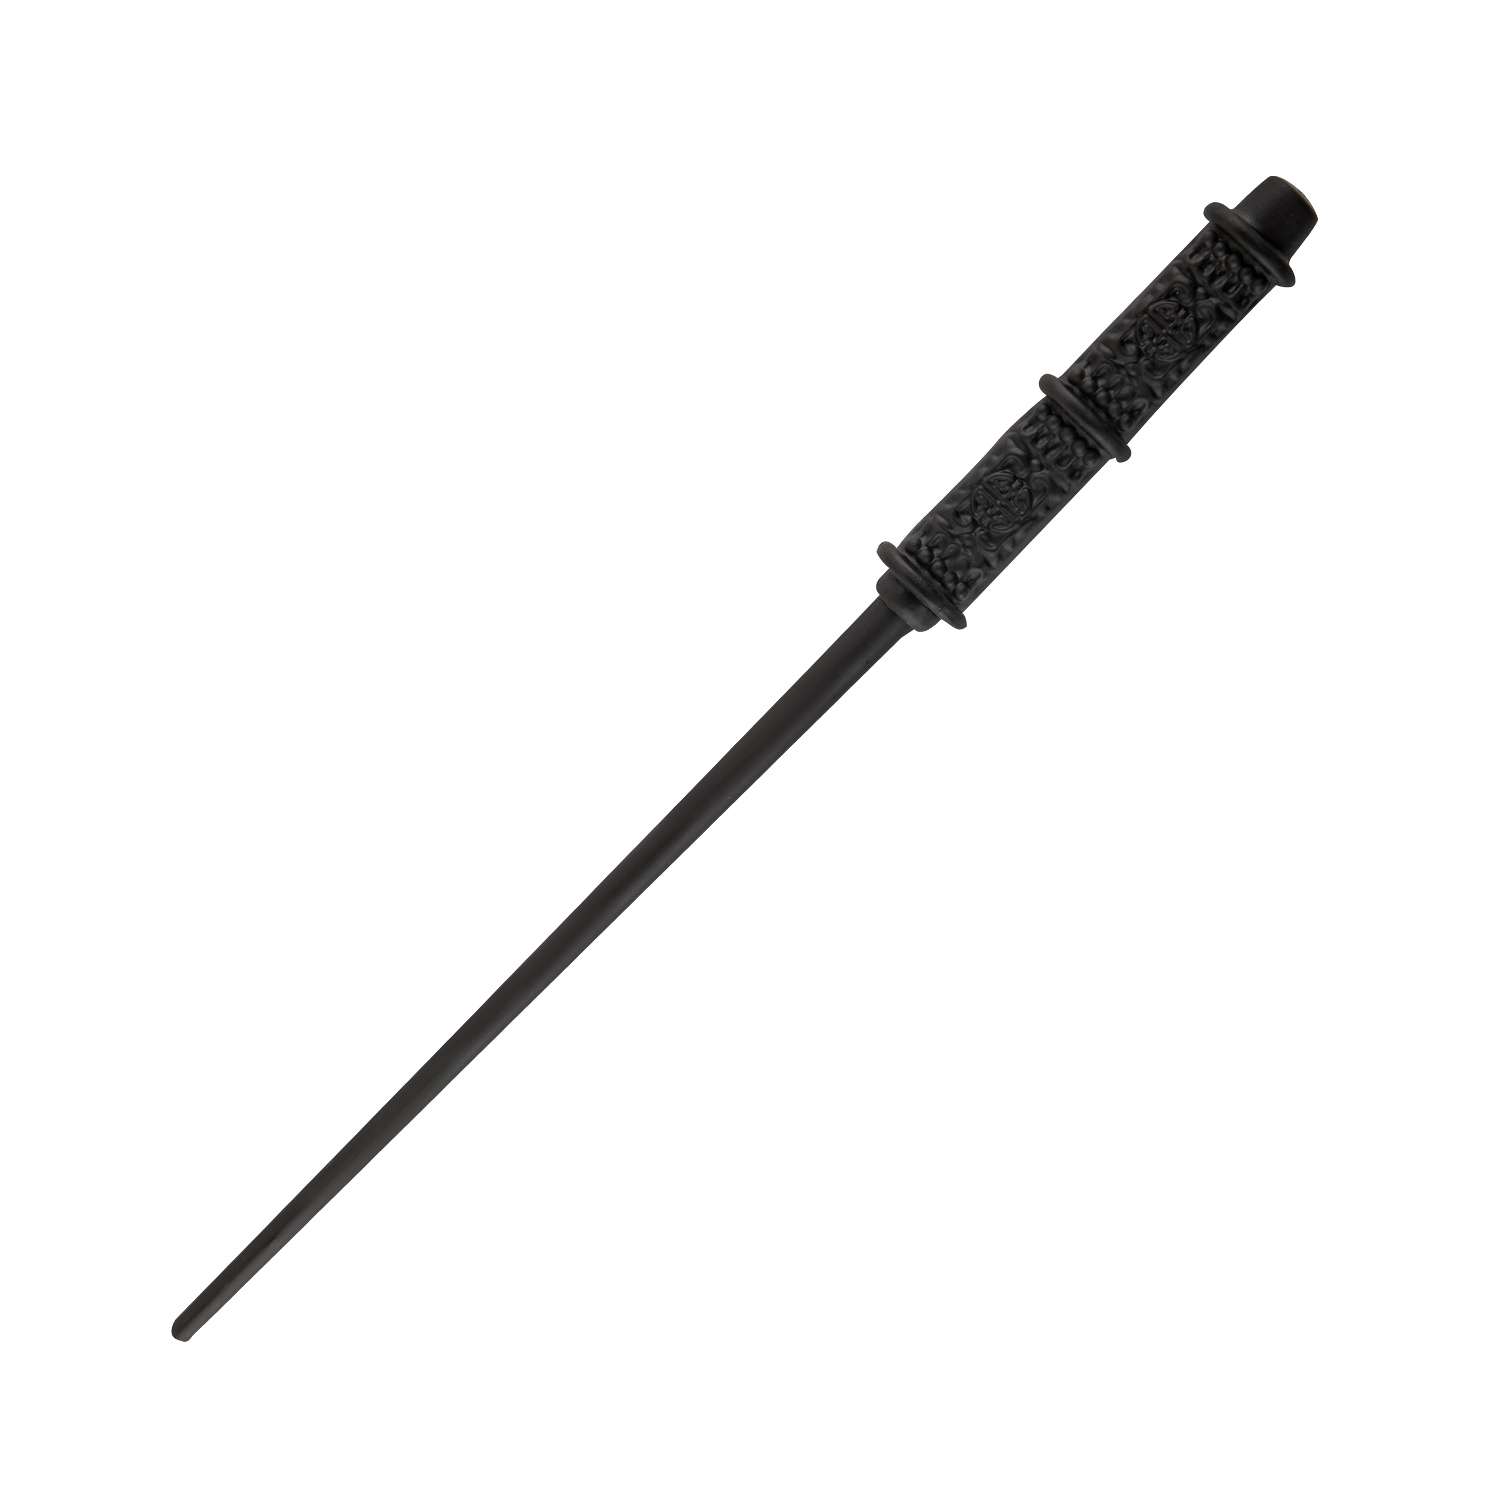 Ручка Harry Potter в виде палочки Северуса Снейпа 25 см с подставкой и закладкой - фото 4